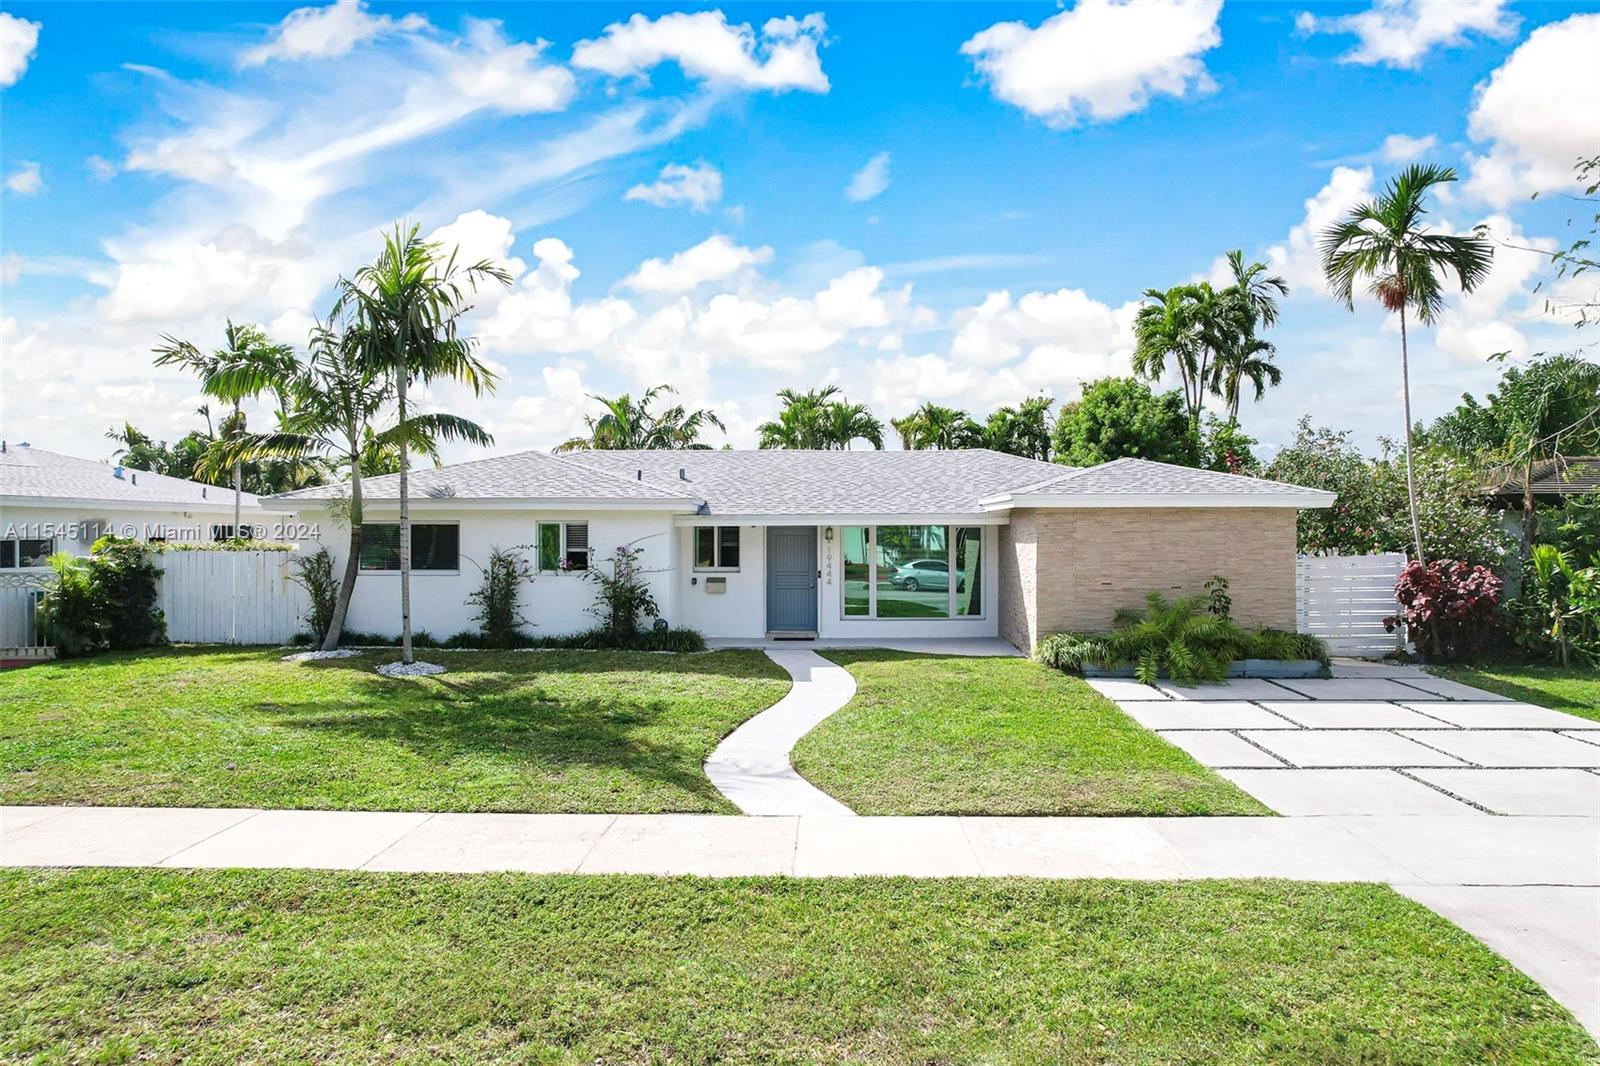 Property for Sale at 19444 Ne 19th Pl, Miami, Broward County, Florida - Bedrooms: 4 
Bathrooms: 2  - $1,175,000